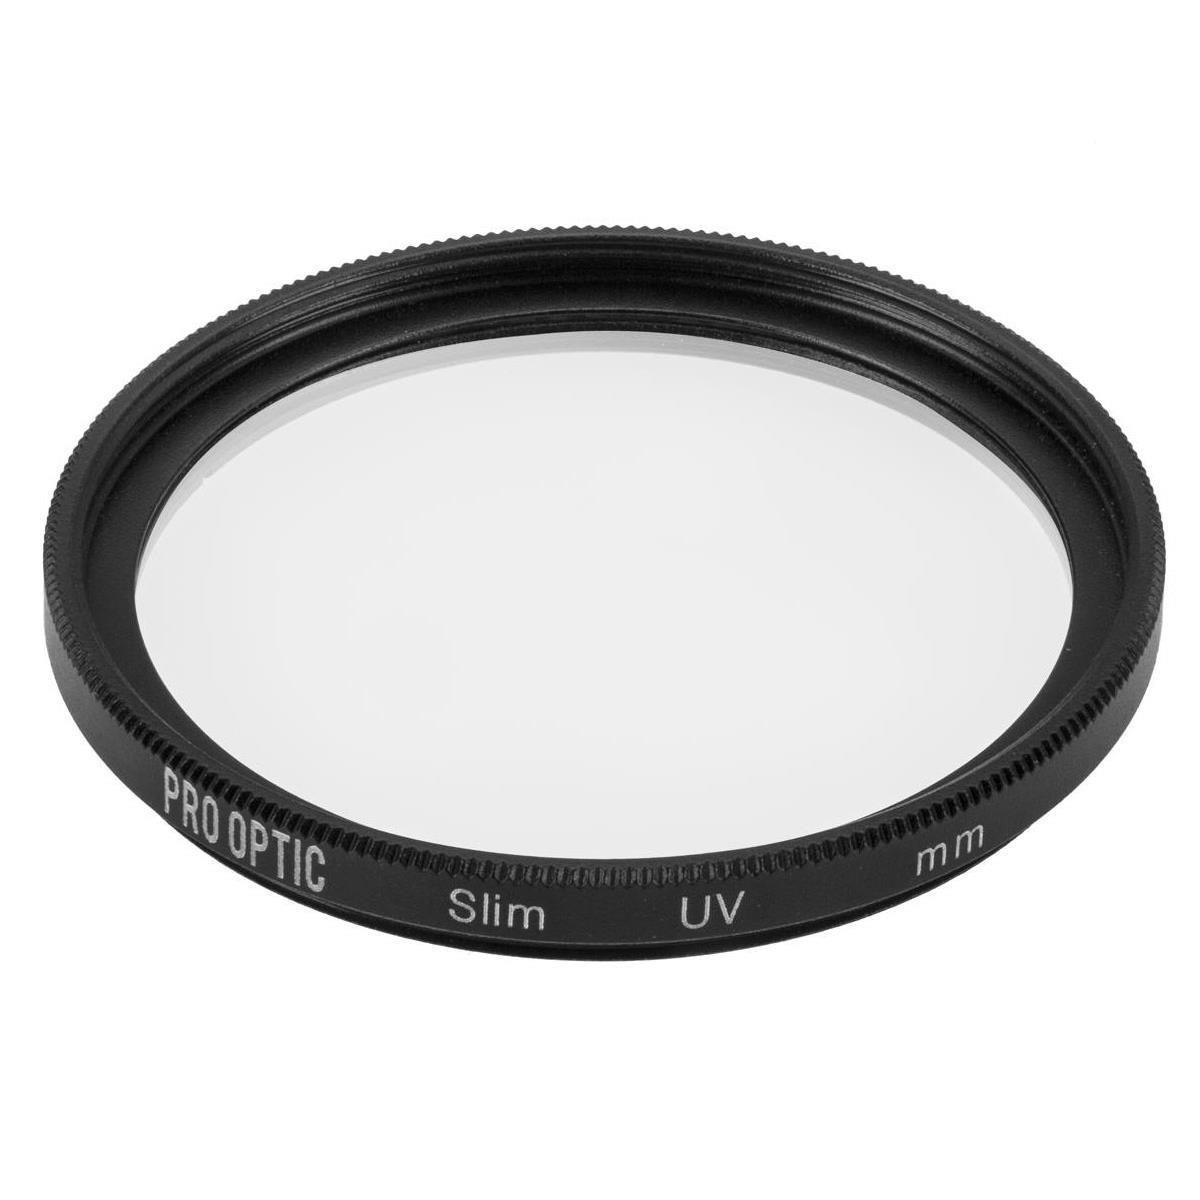 ProOPTIC Pro Digital 55mm Multi Coated UV Slim Filter цена и фото